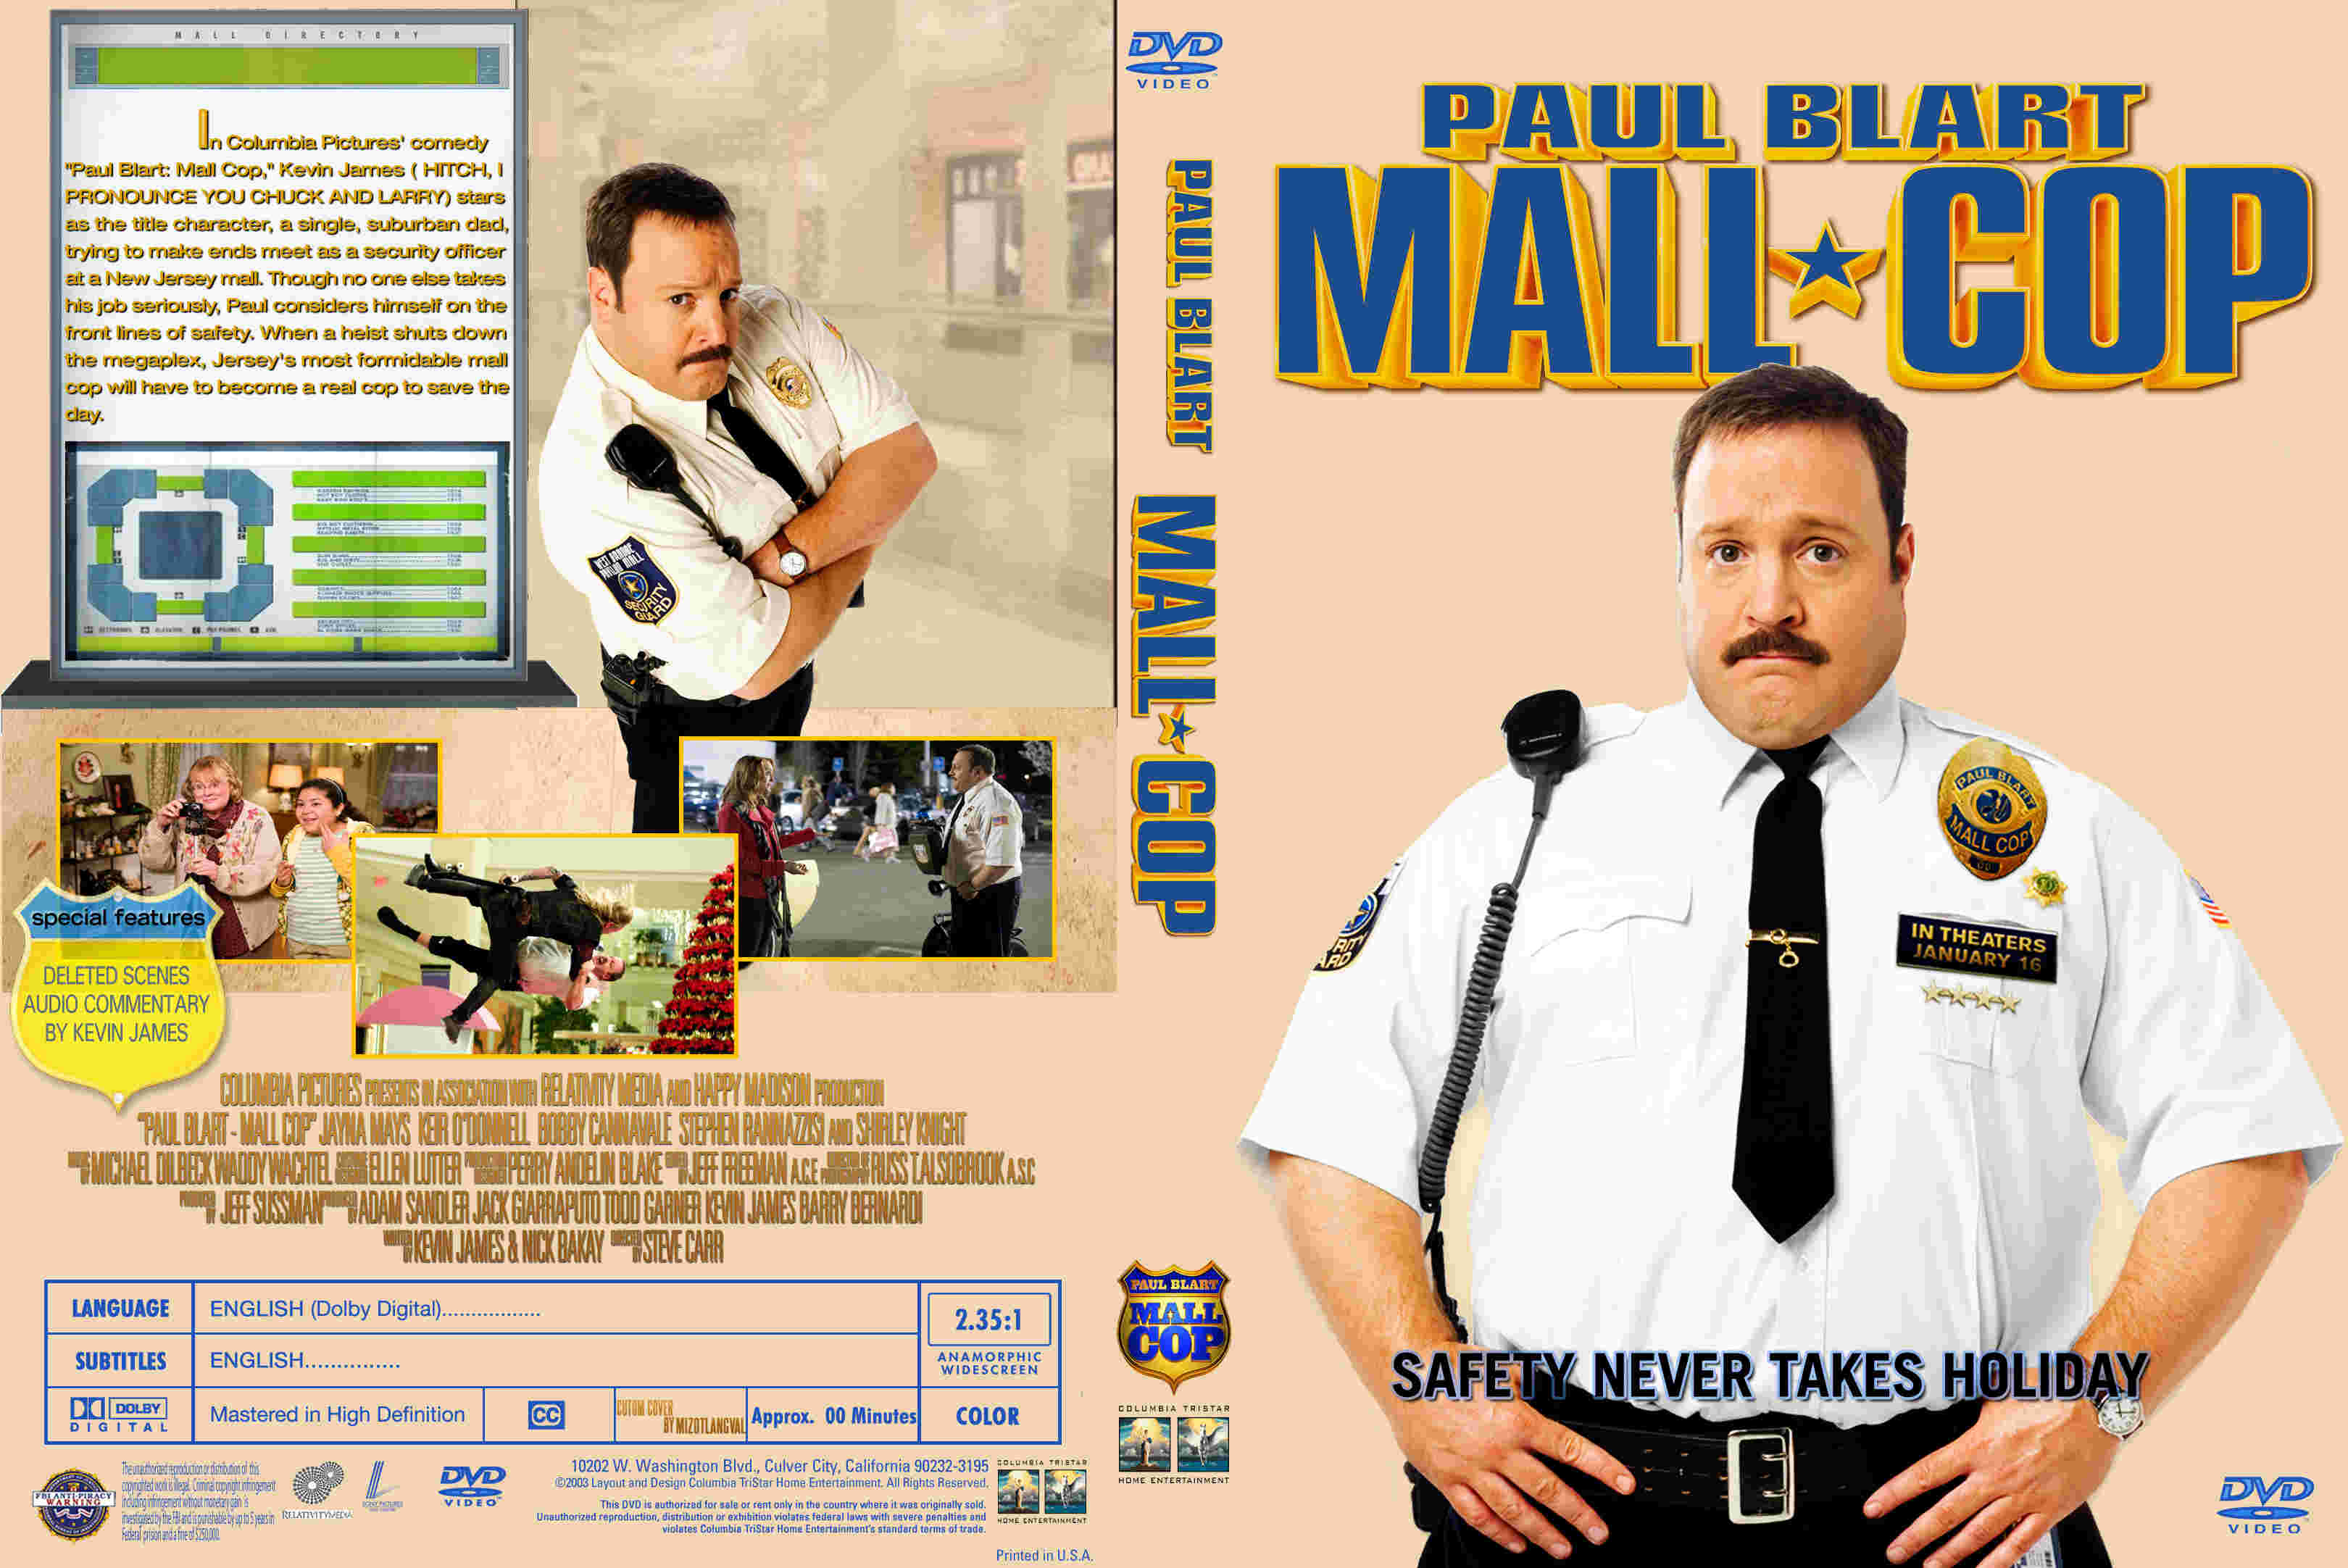 Paul Blart Mall Cop (2009) Dual Audio Hindi 480p 720p BluRay Download